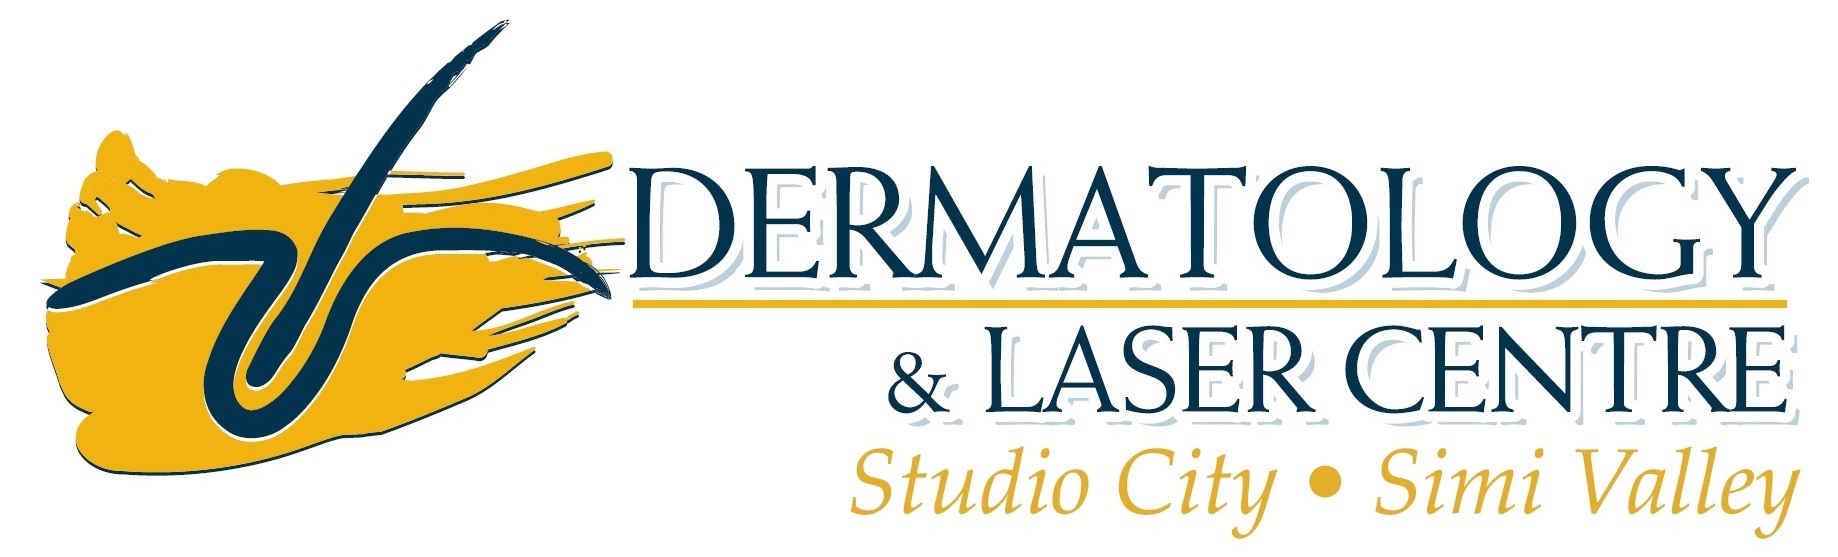 Dermatology-Laser-Centre-logo